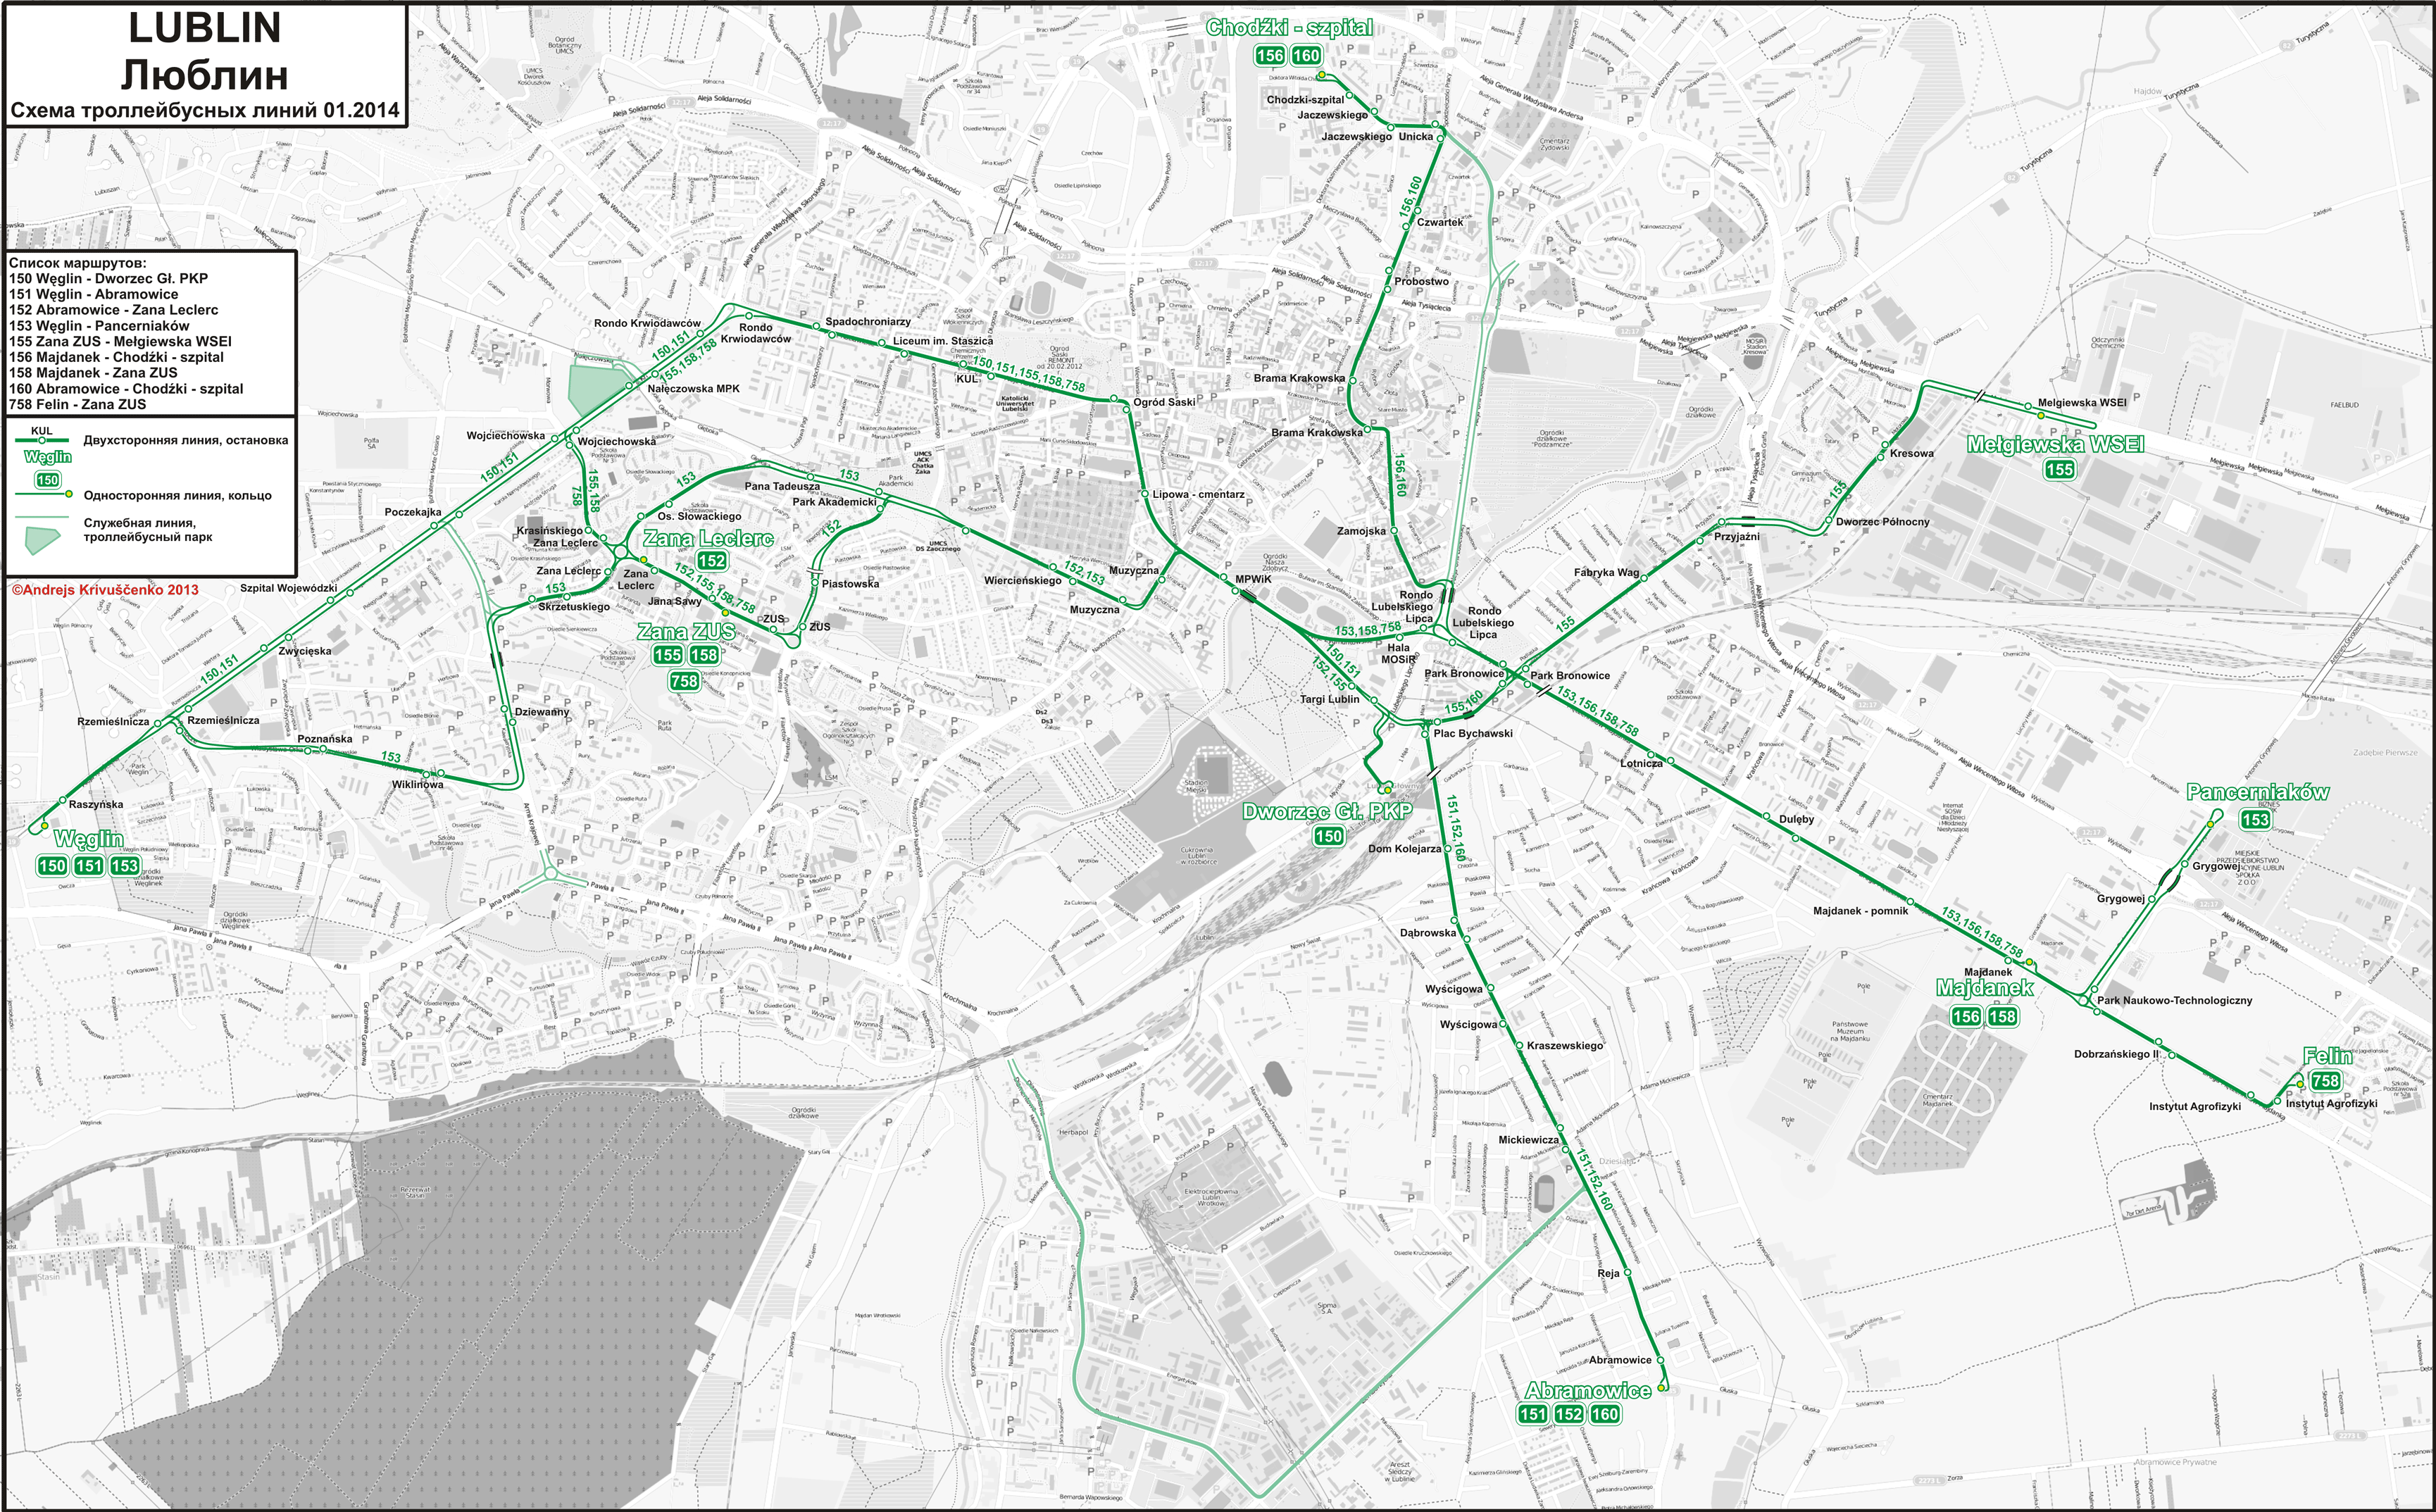 Lublin — Maps